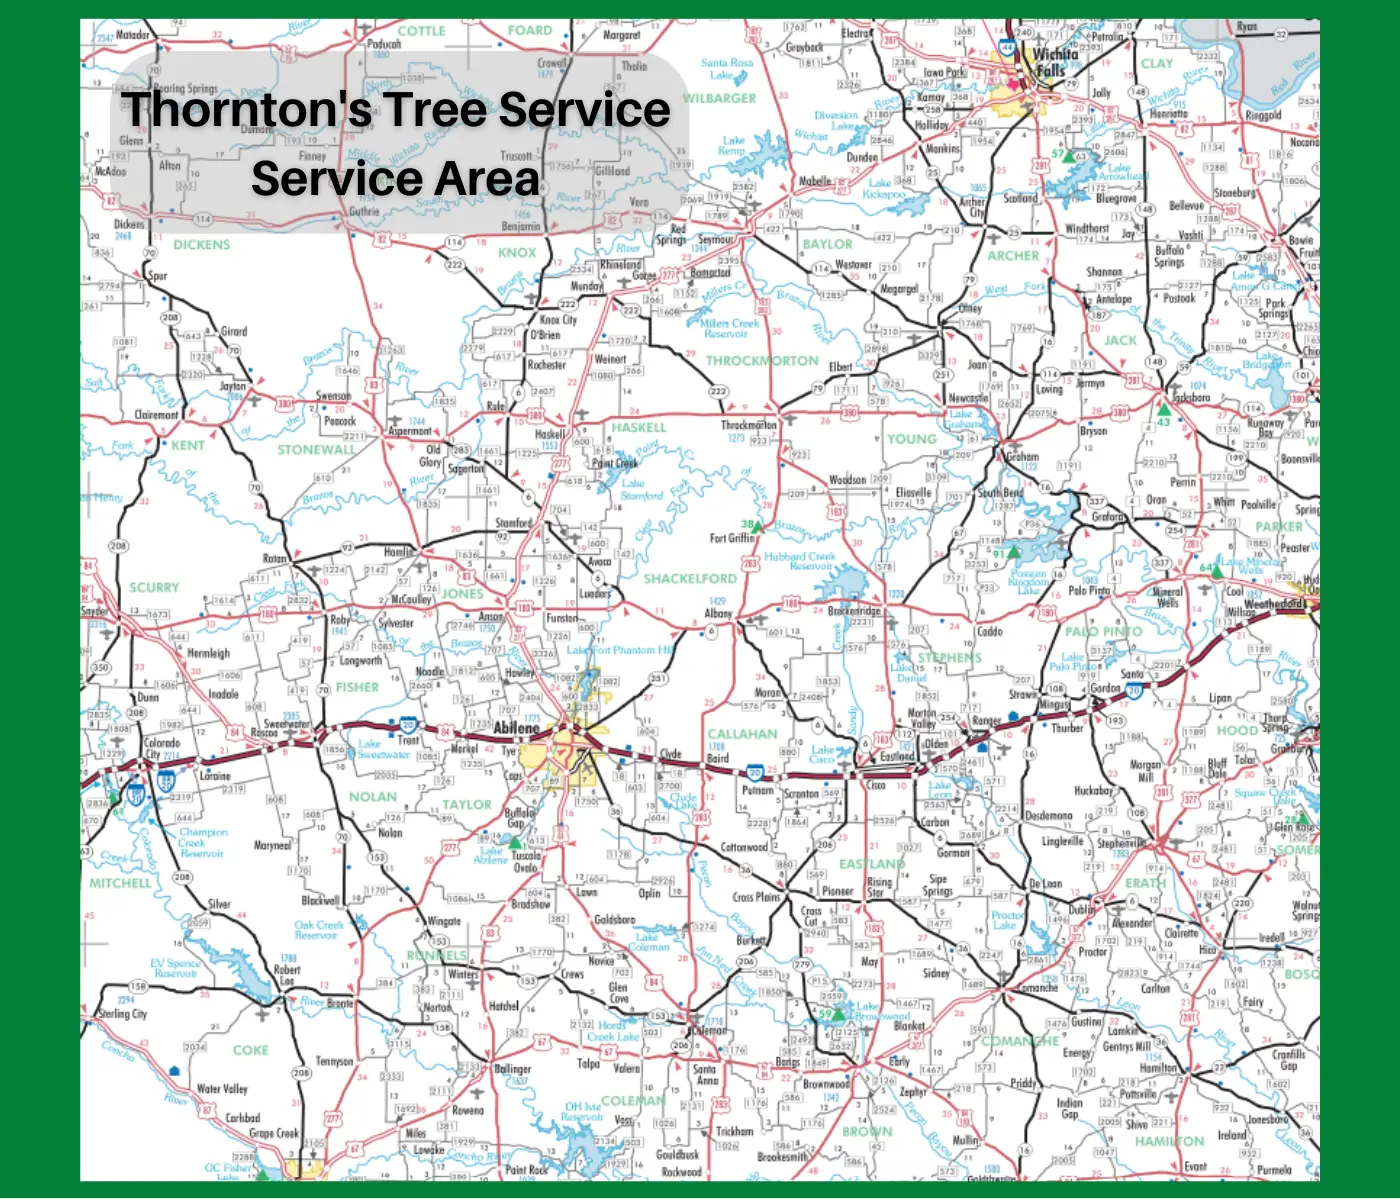 Thornton's Tree Service - Service Area